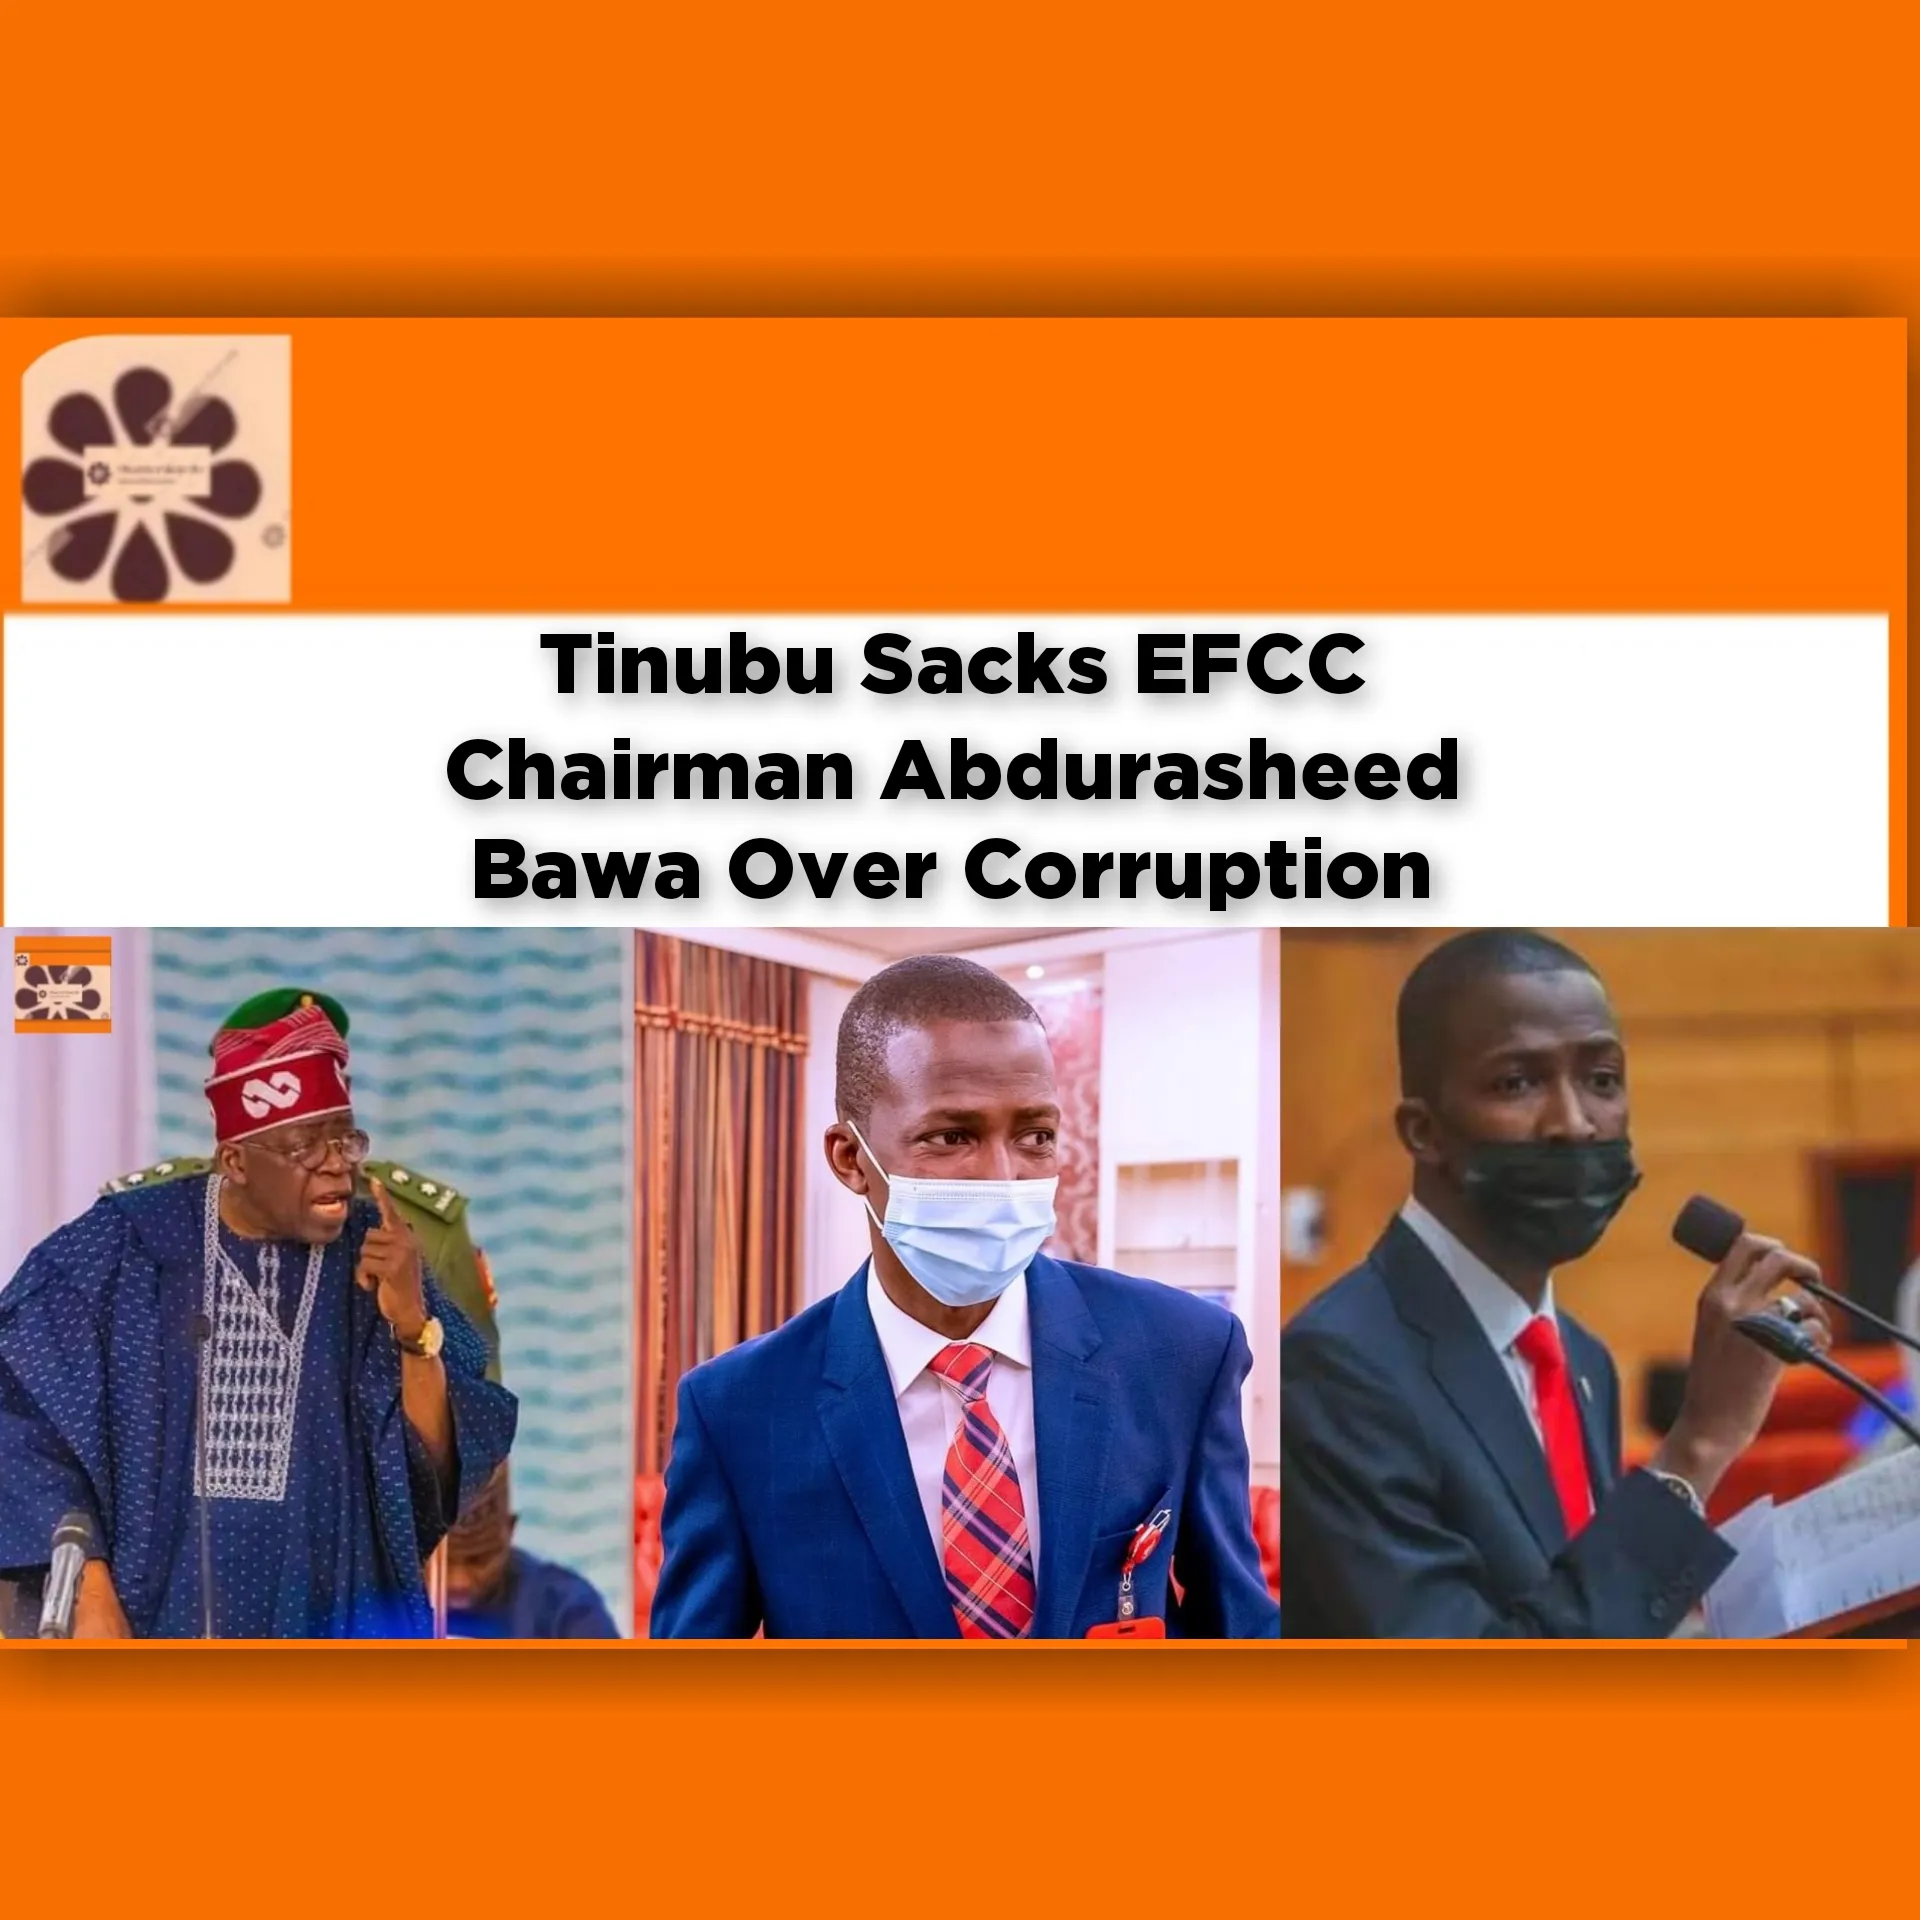 Tinubu Sacks EFCC Chairman Abdurasheed Bawa Over Corruption